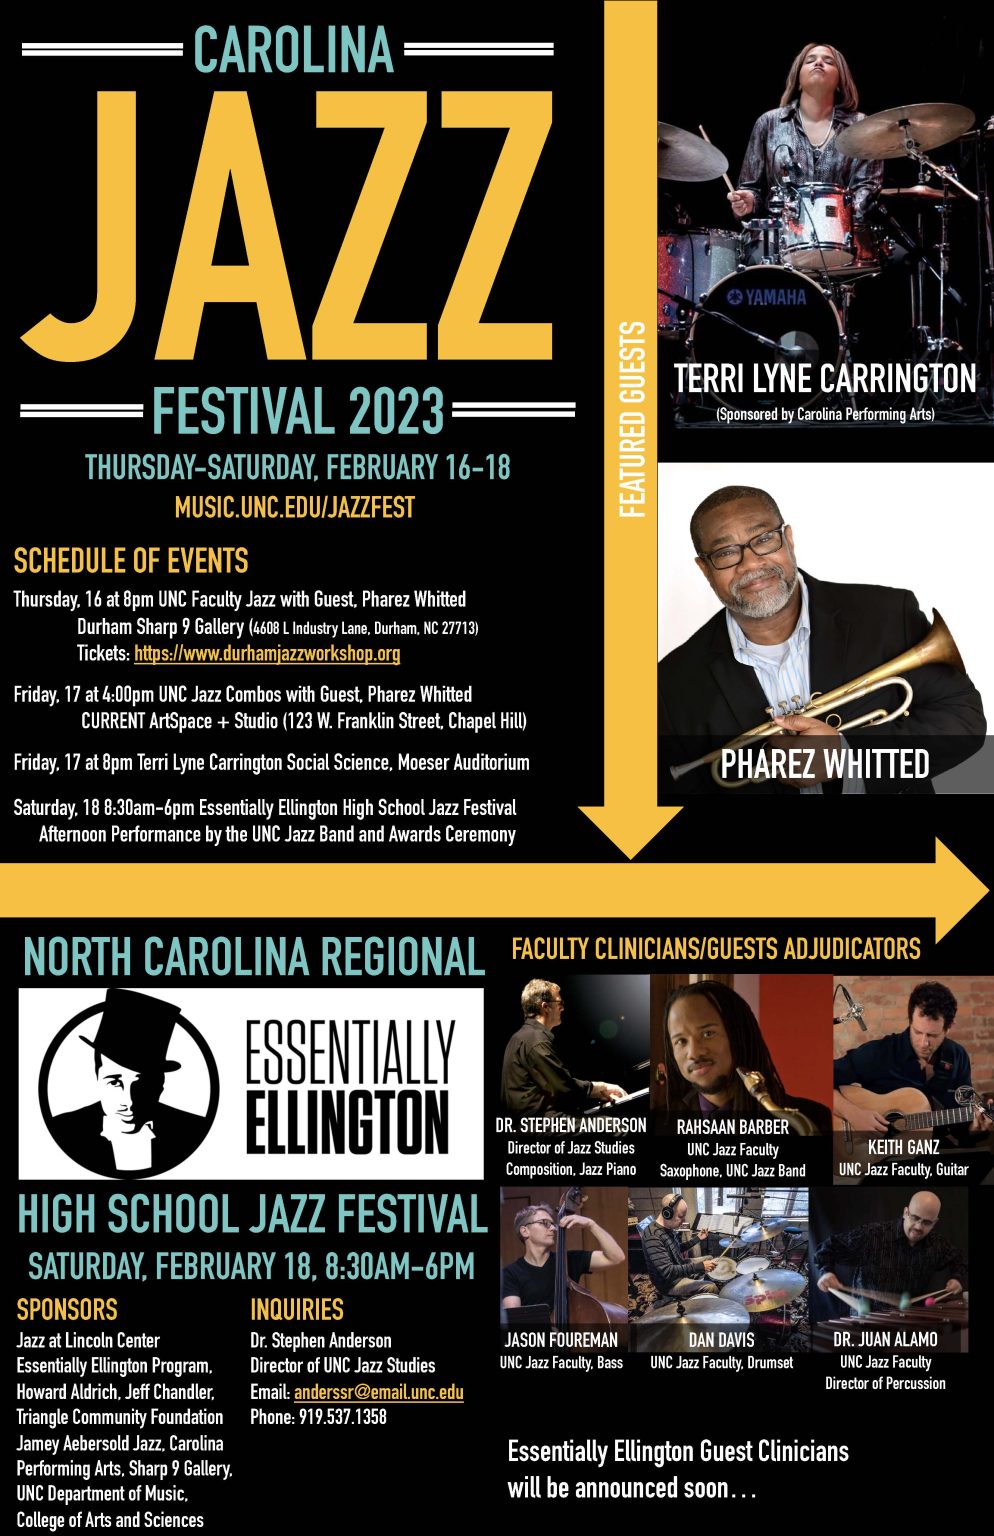 Carolina Jazz Festival Department of Music